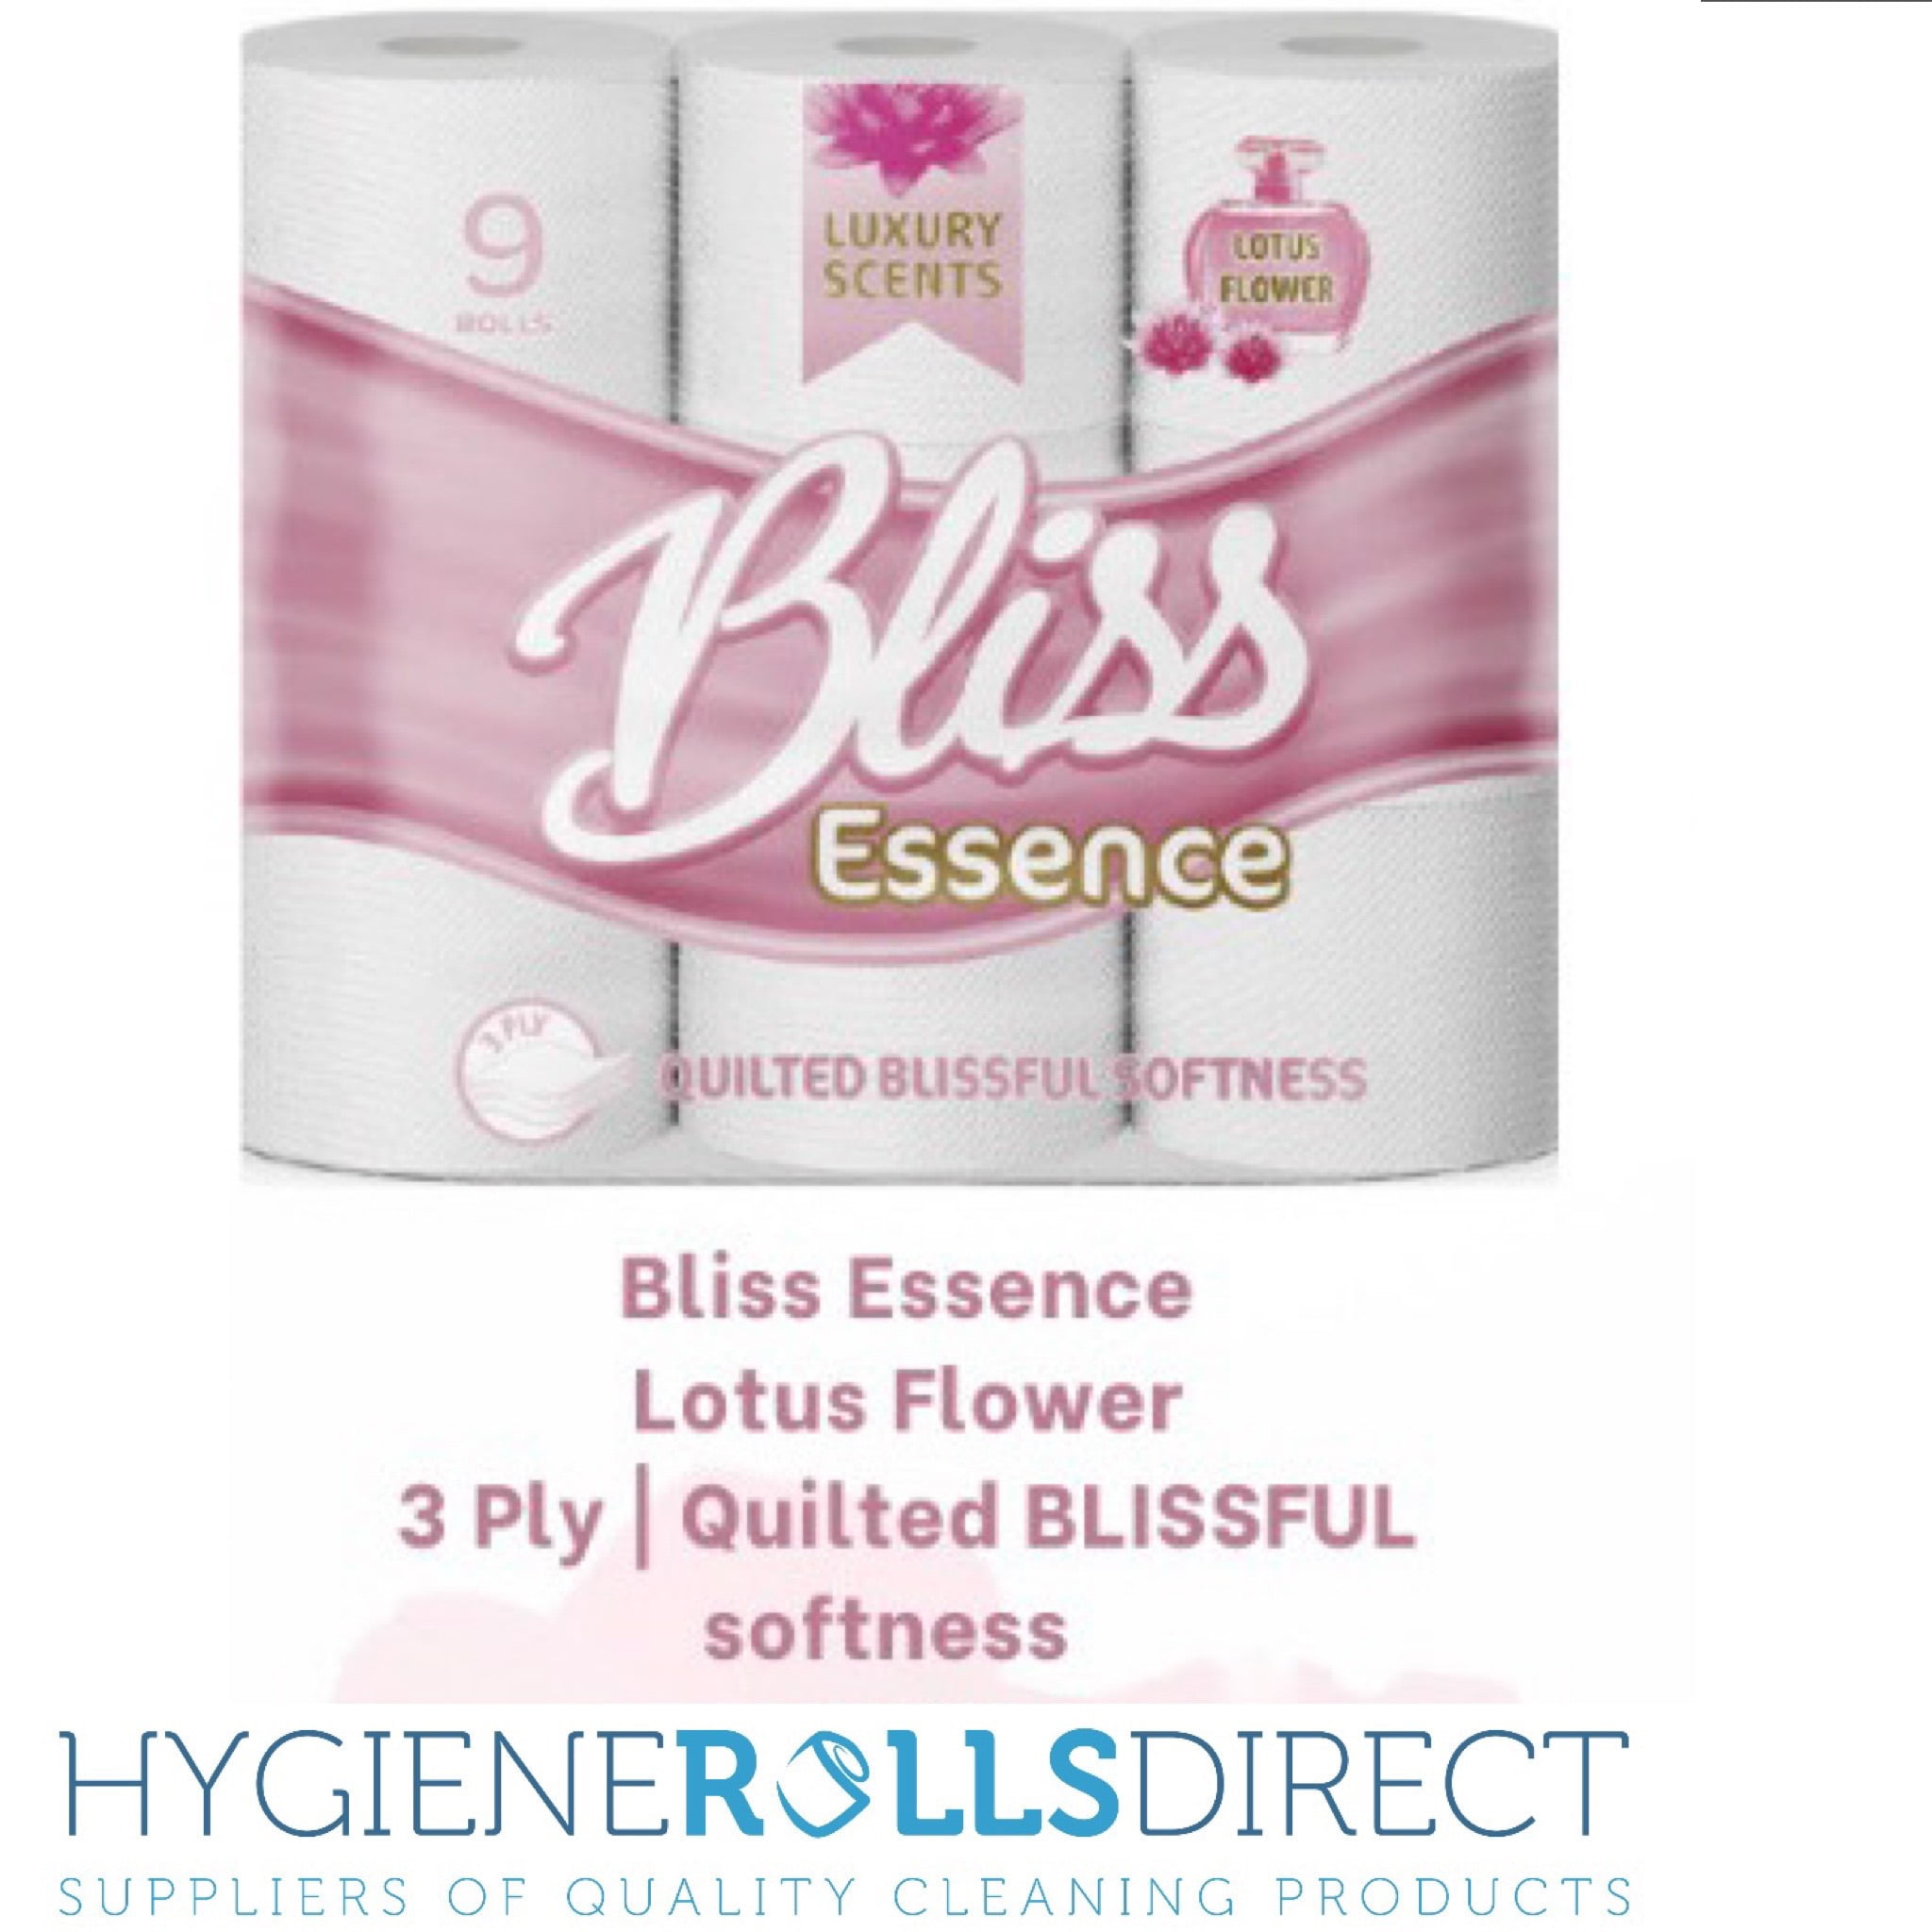 Bliss Essence Luxury 3Ply Scented Bathroom Toilet Tissue Rolls - Lotus